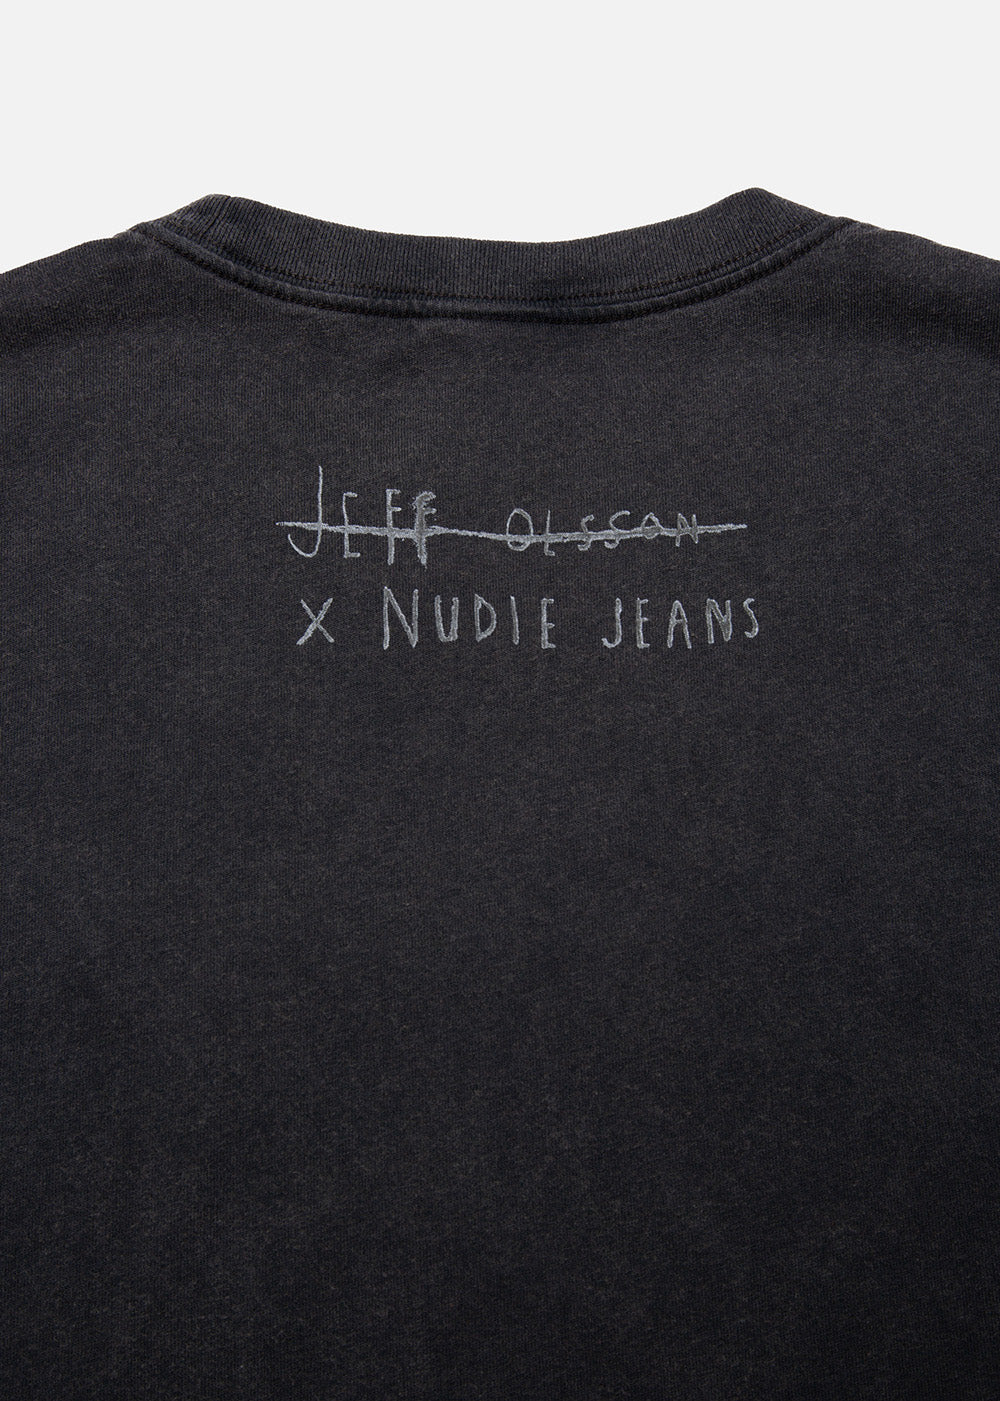 Jeff Olsson x Roy Oh No T-Shirt - Black - Nudie Jeans - Danali